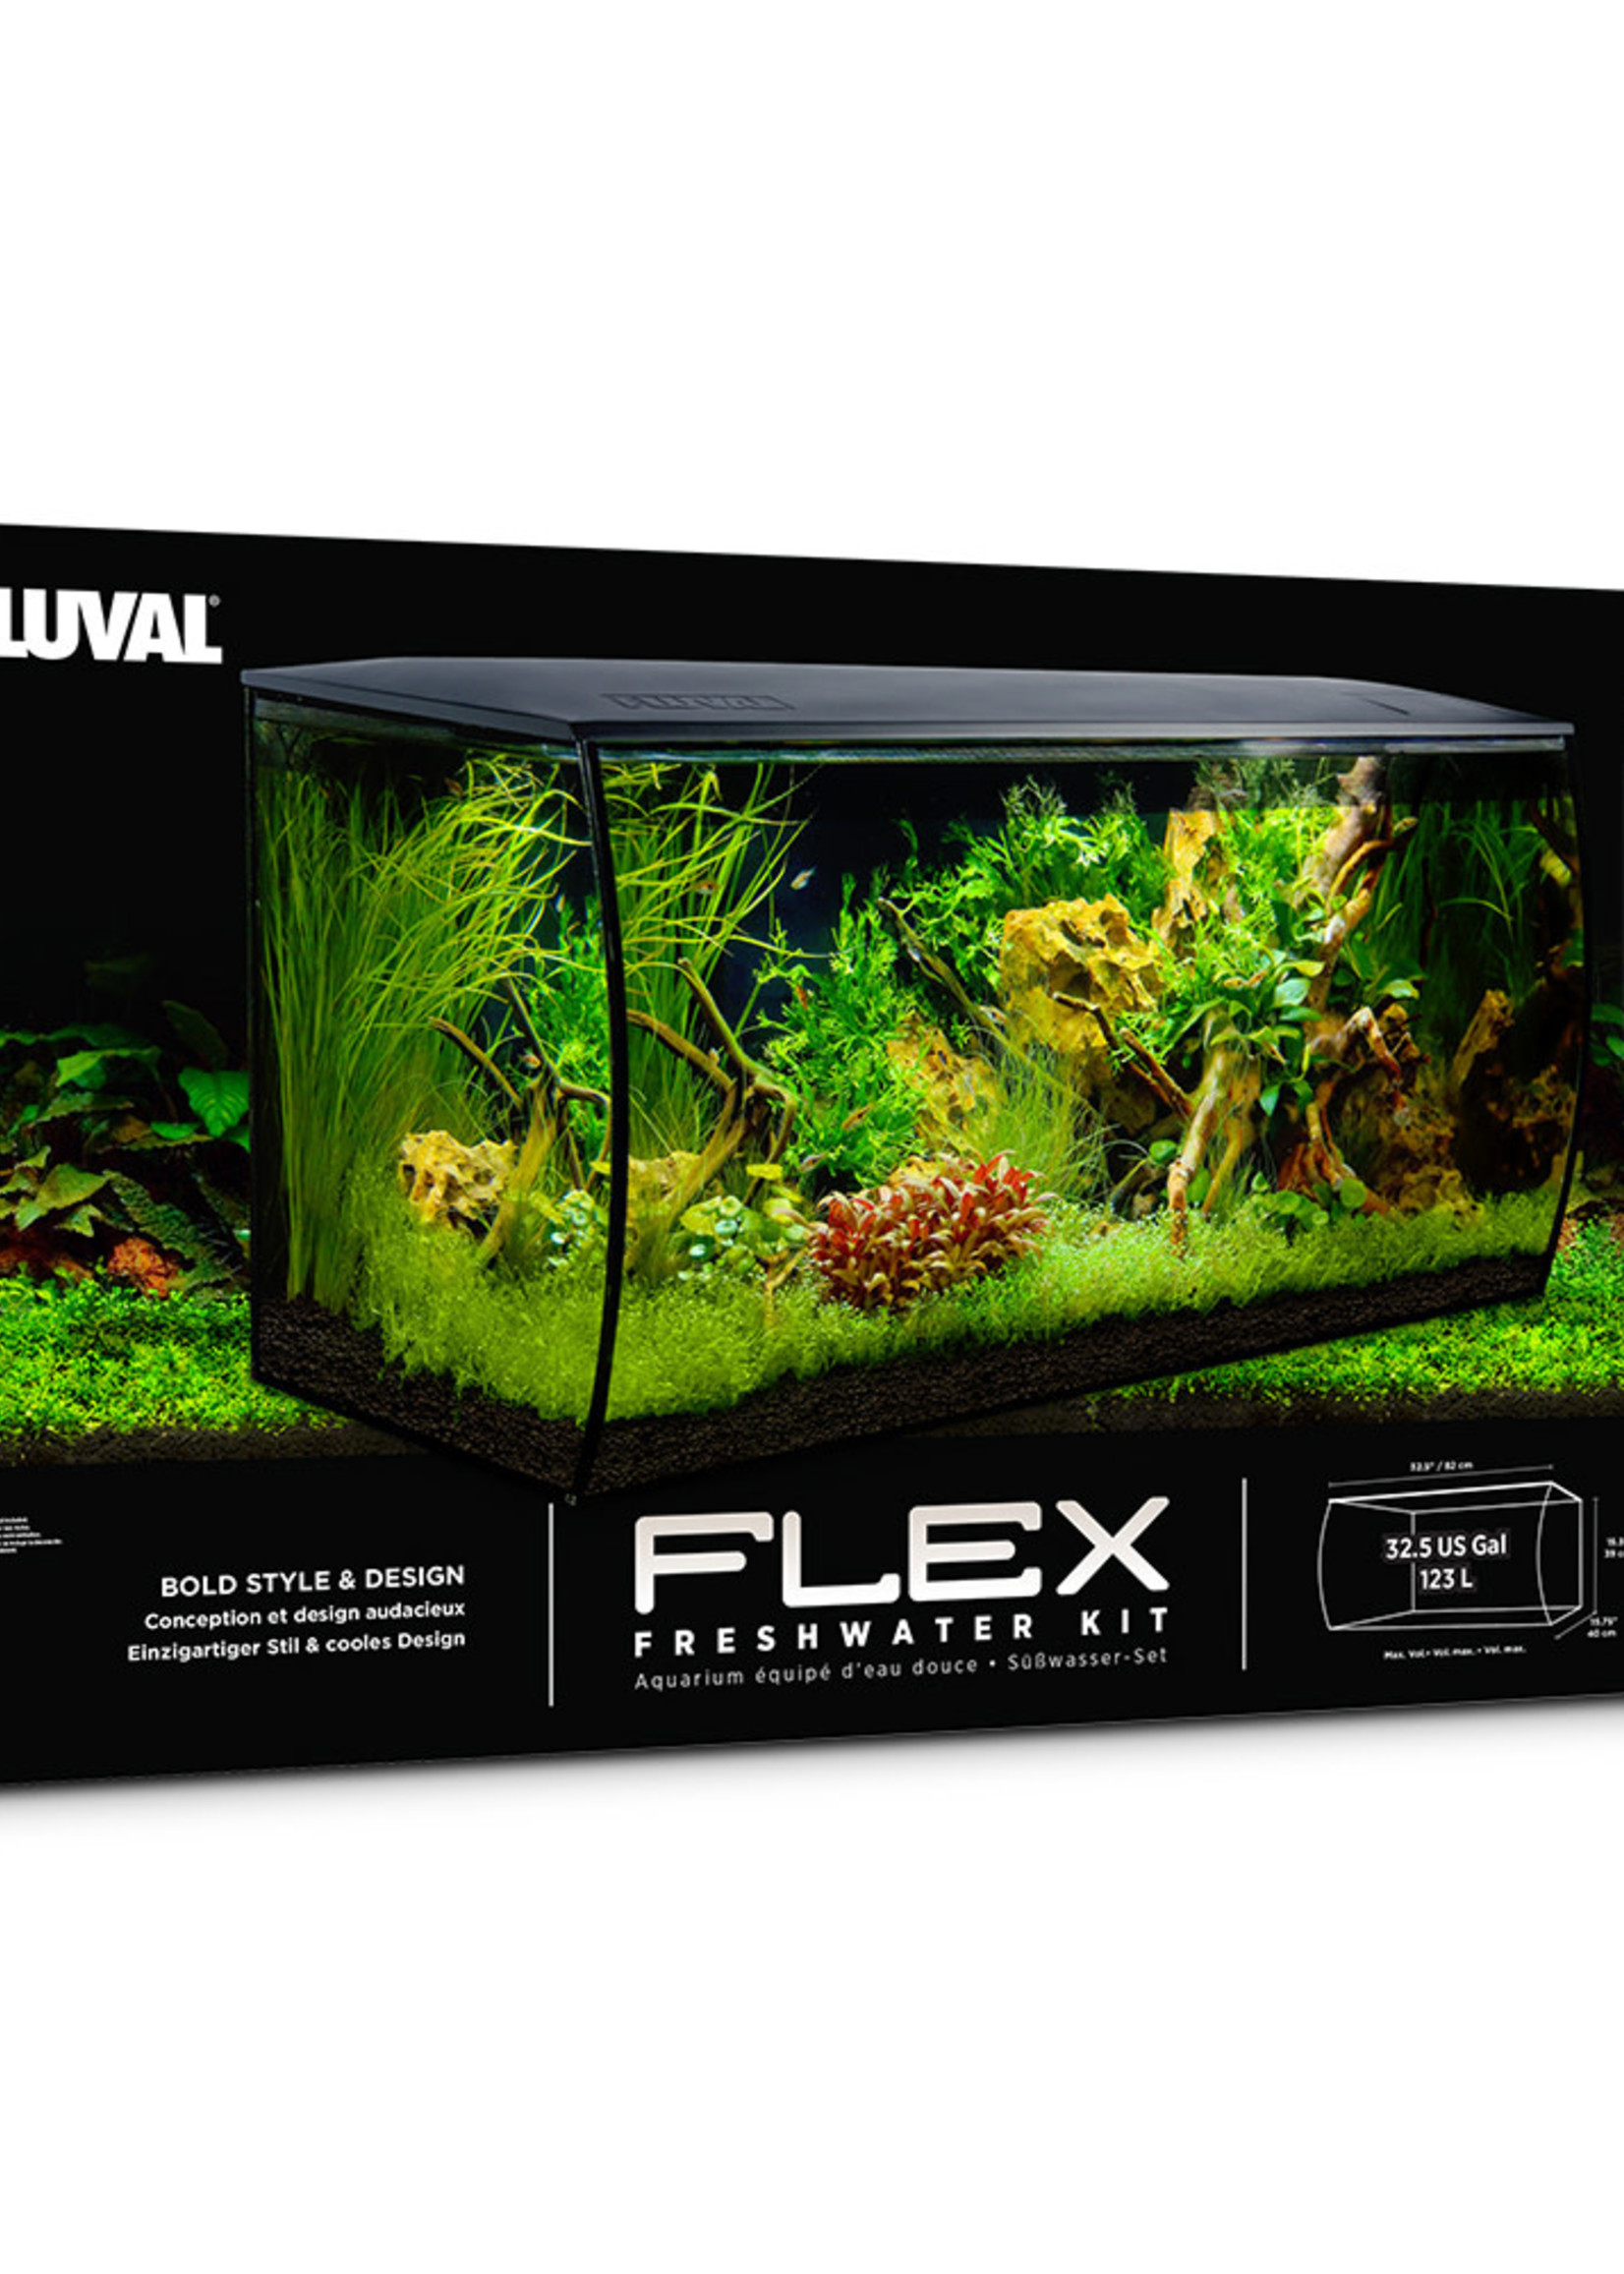 Fluval FLEX Aquarium Kit - Black - 123 L (32.5 US Gal)